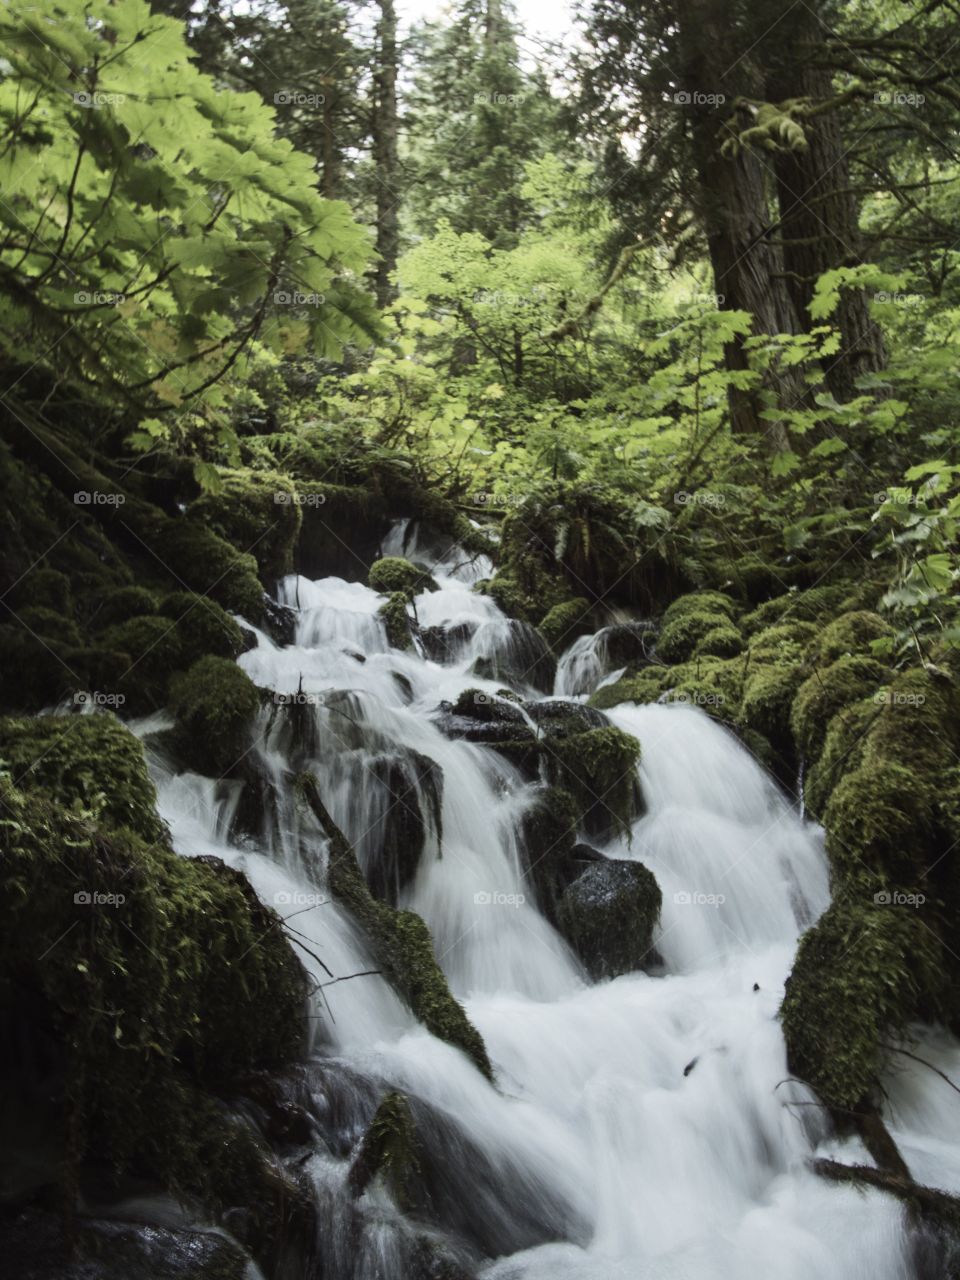 Northwest stream . Stream off a waterfall in Oregon  